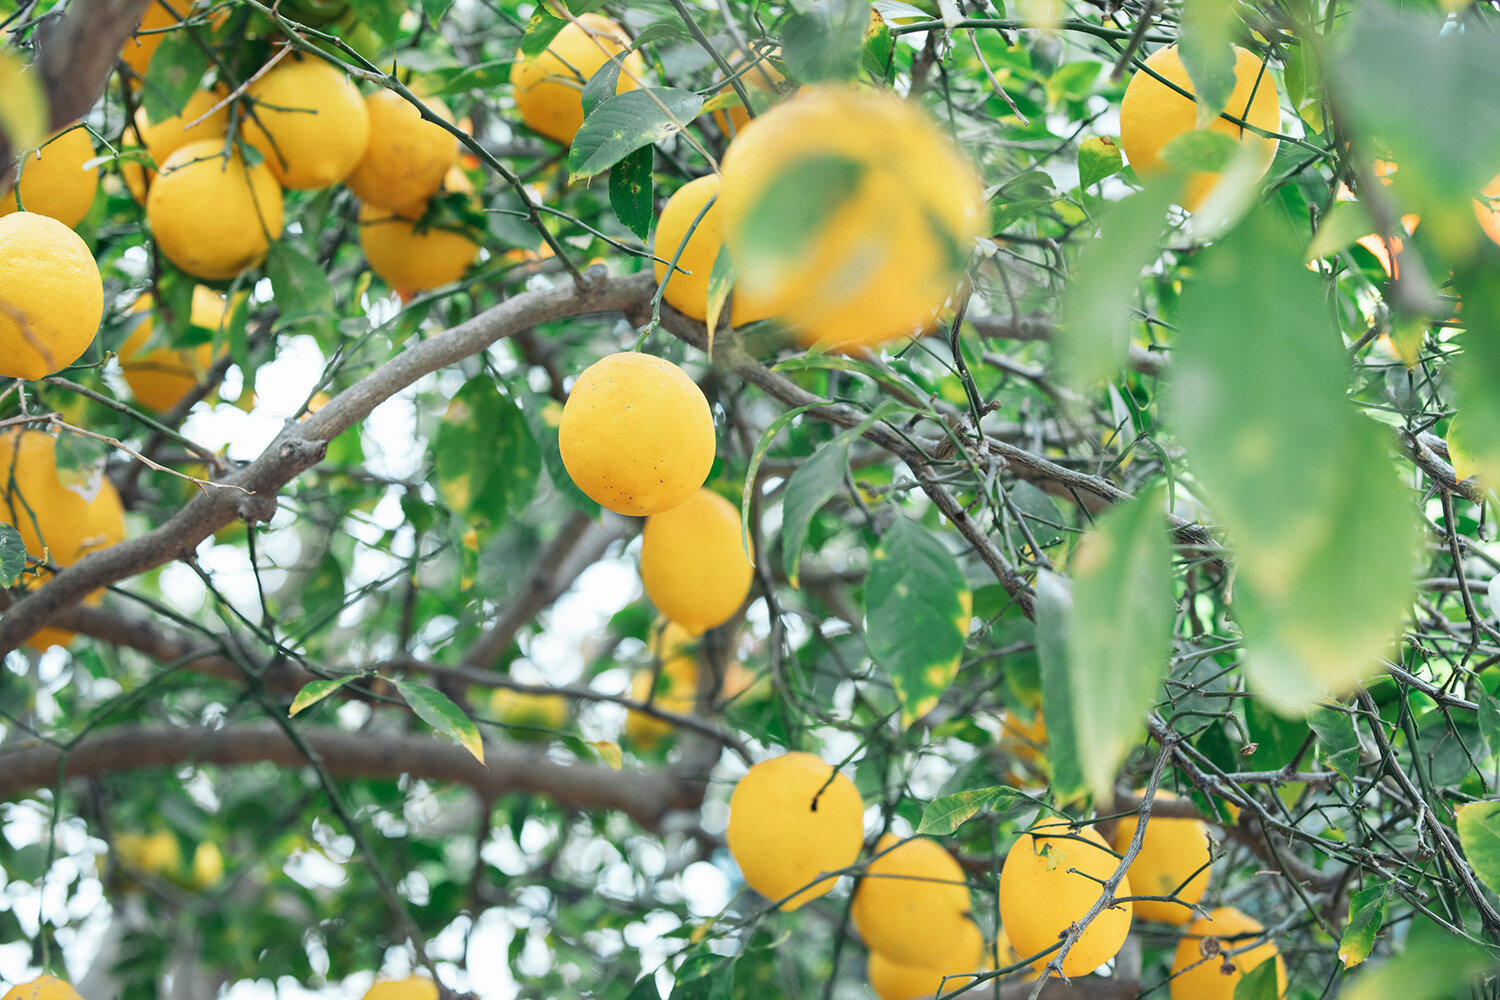 ProduceGood recovered Lemons